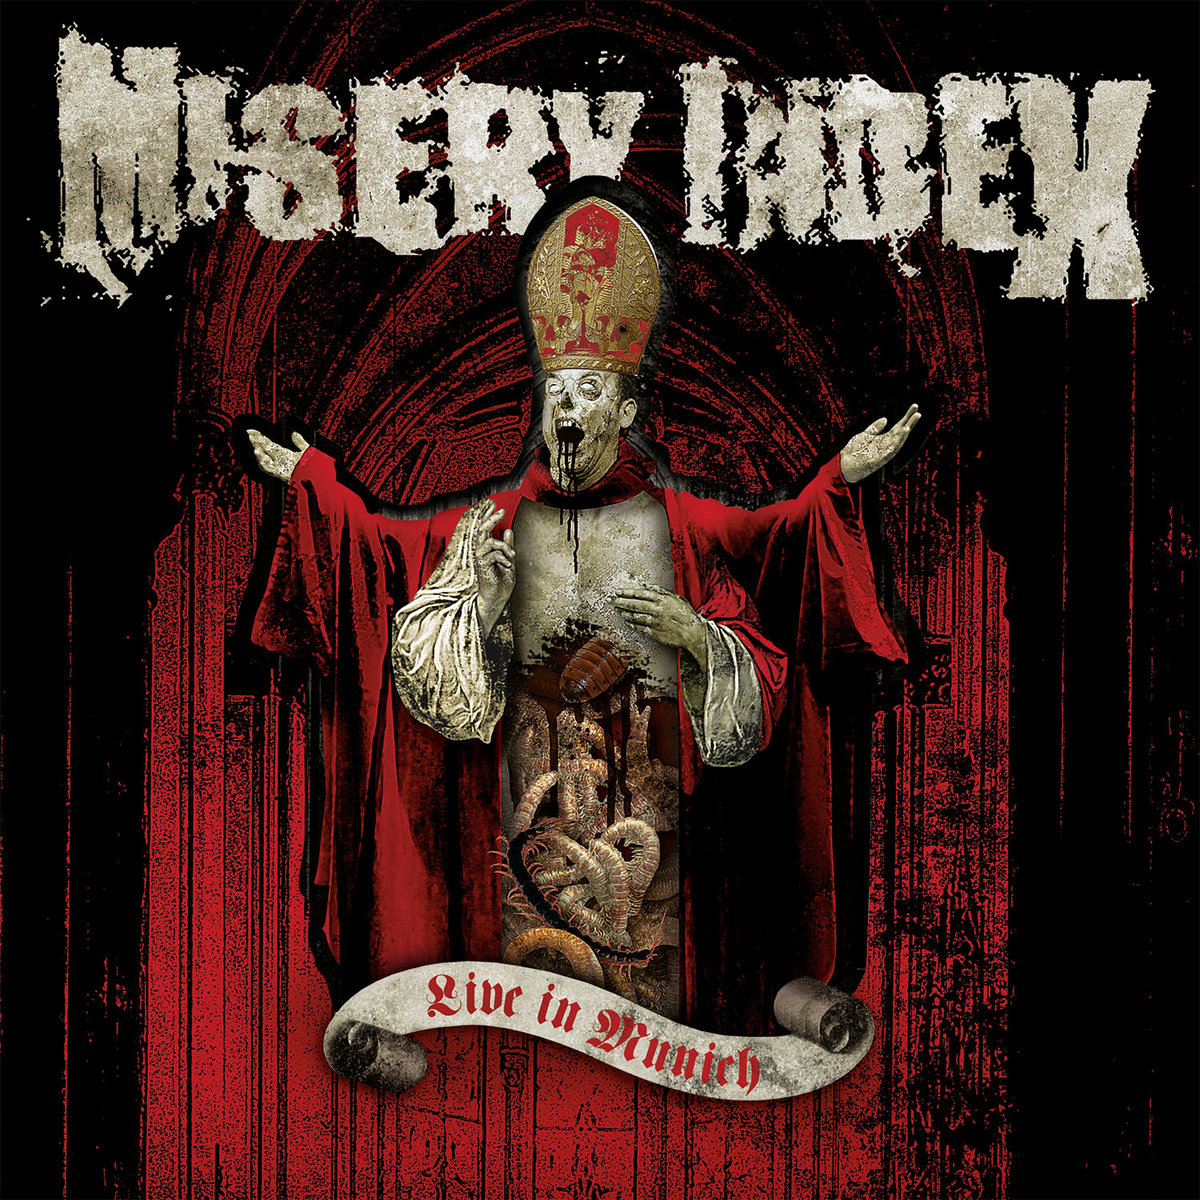 Misery Index #25